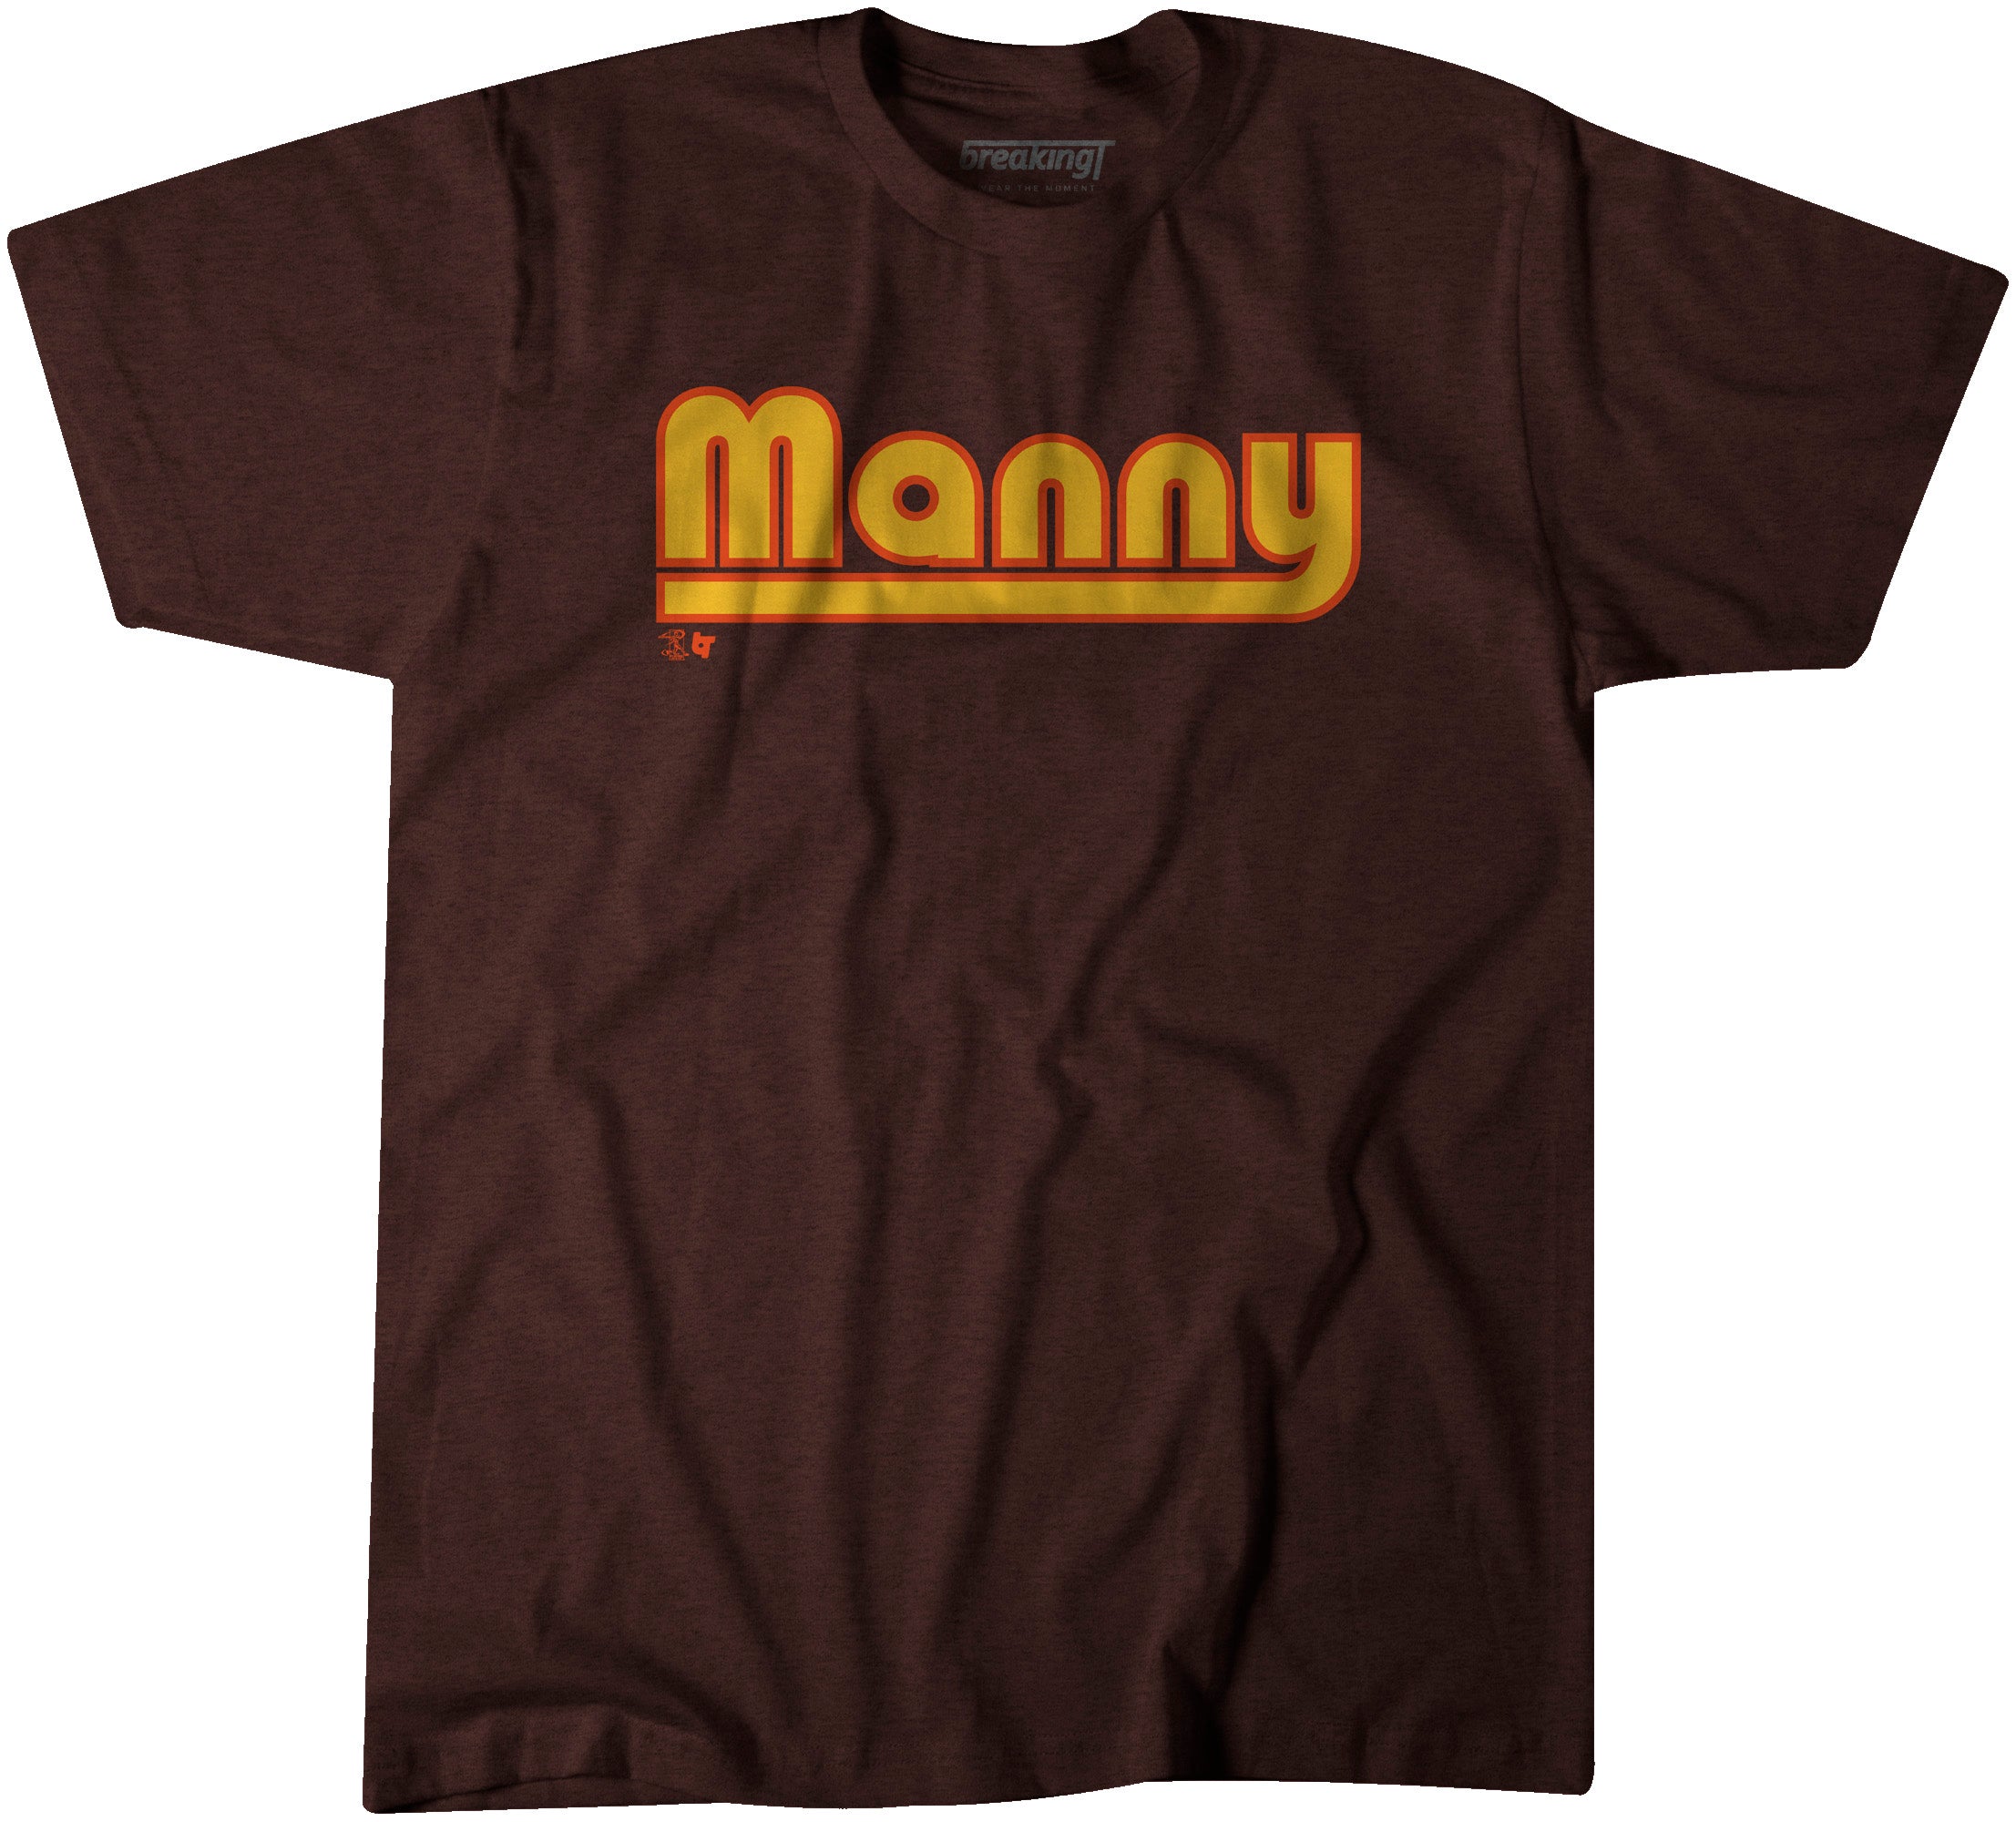 Manny, Medium - MLB - Brown - Sports Fan Gear | breakingt